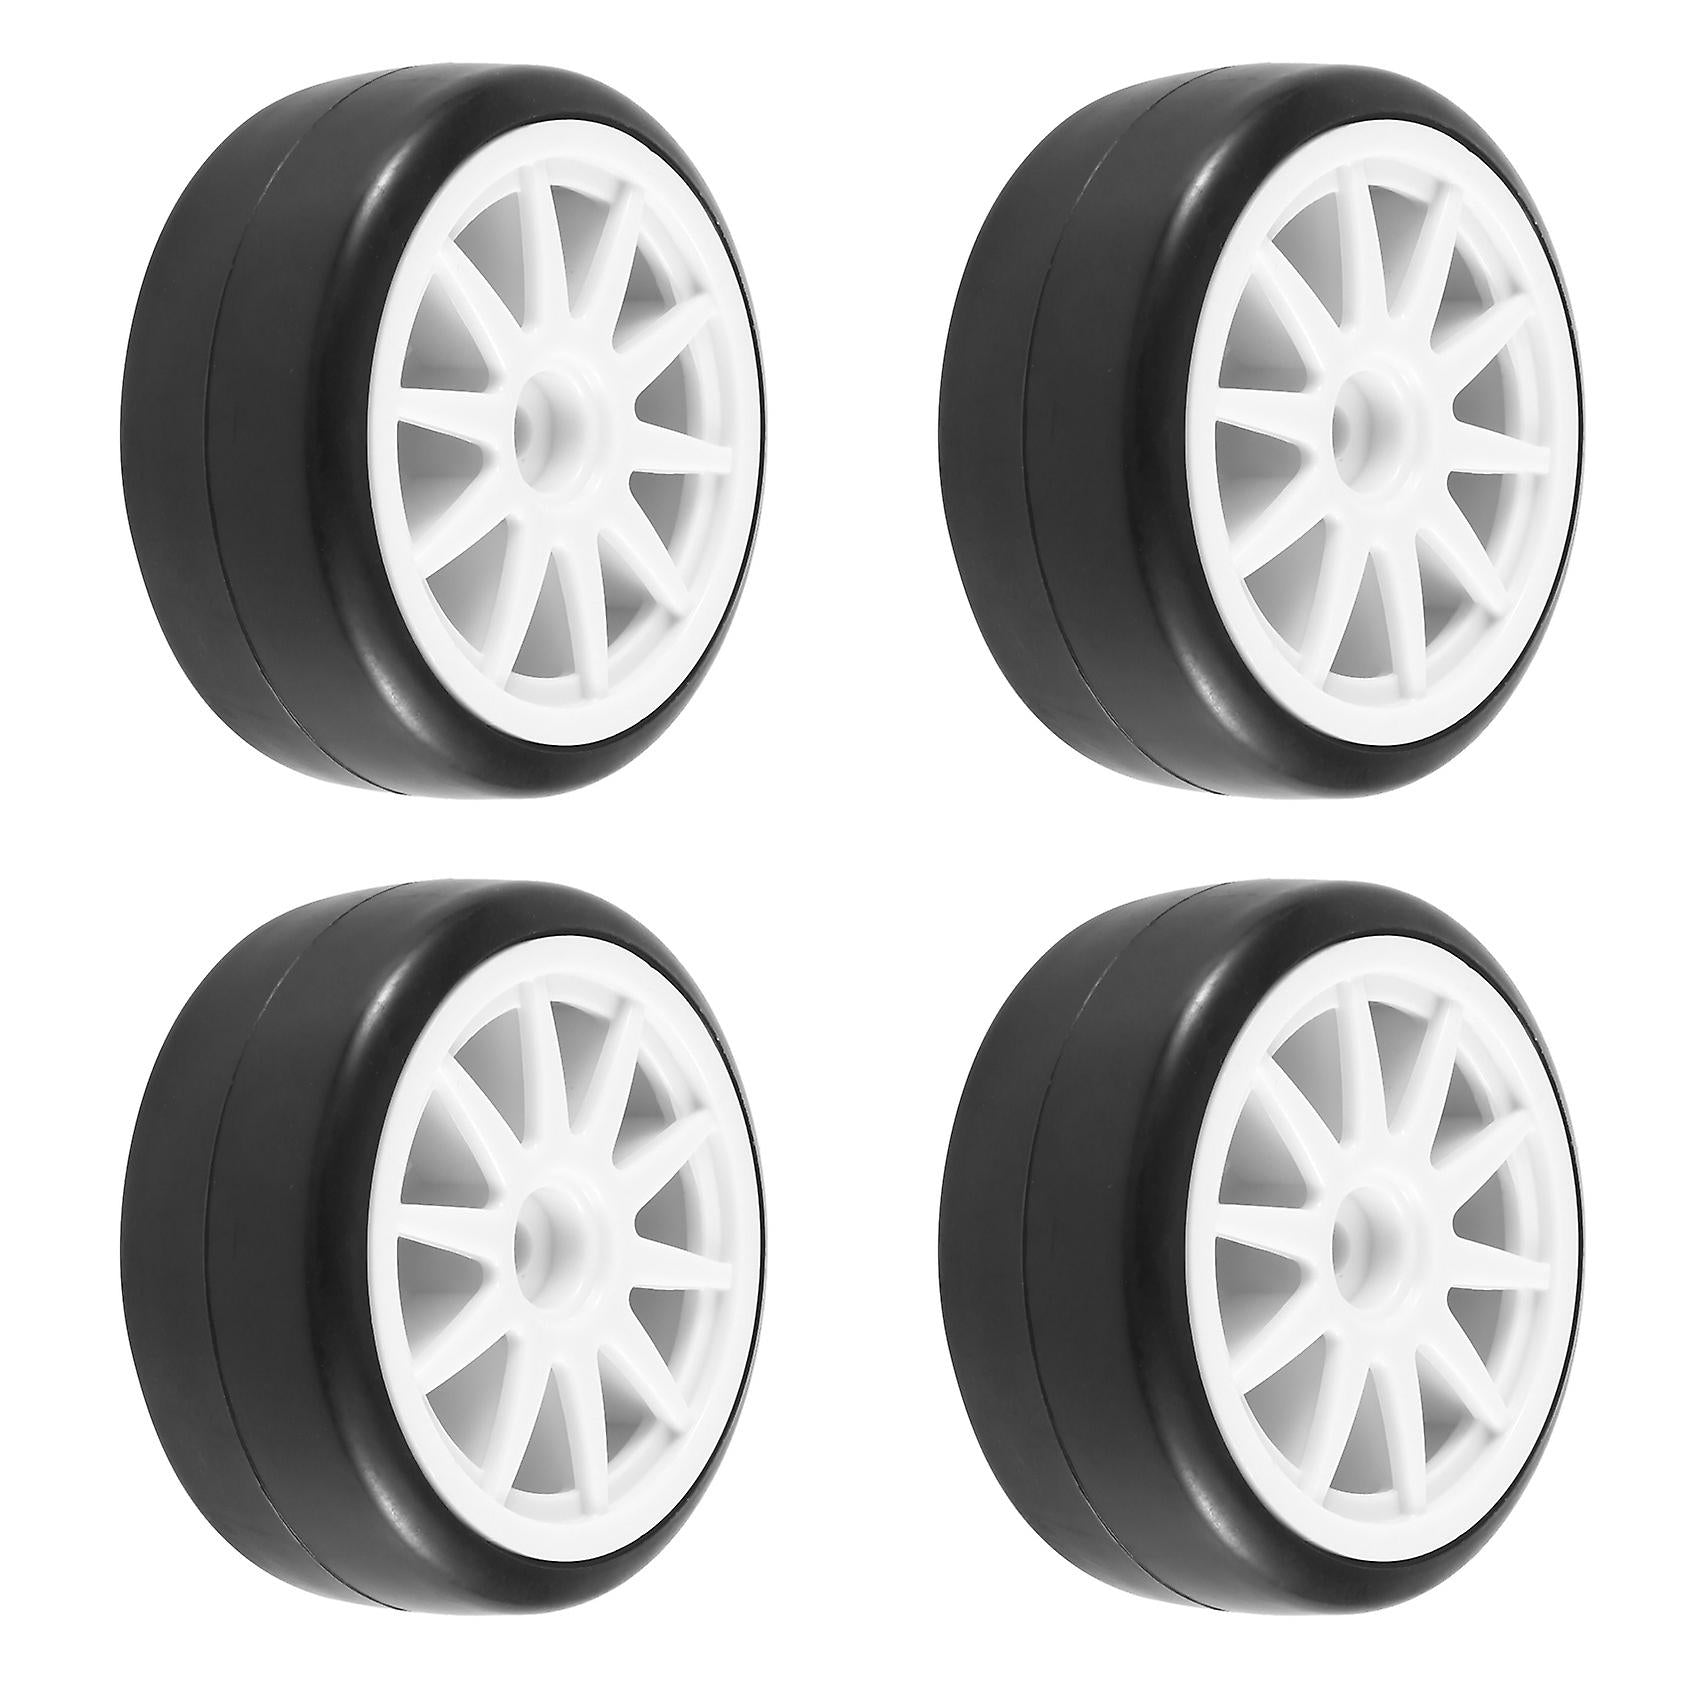 ProtonRC 1/10 Rc Car Rubber Tires On Road white wheels